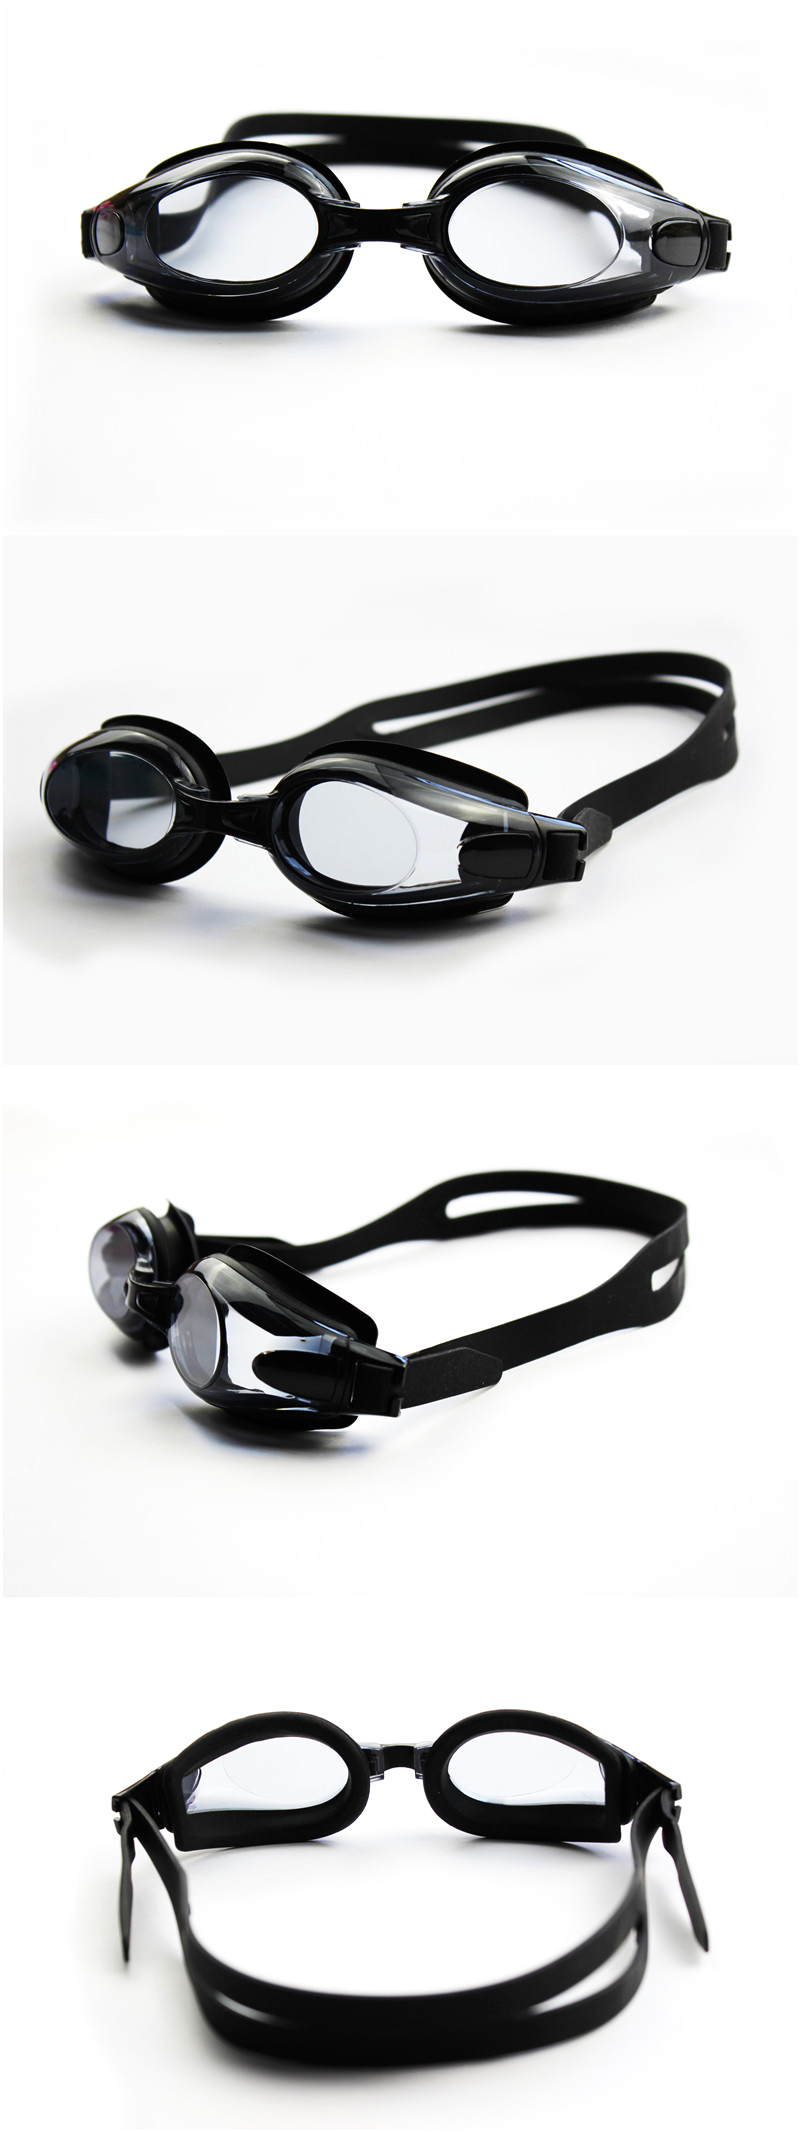 Anti-Fog-Children-Swim-Goggles-Waterproof-Kids-Swimming-Glasses-PC-Lens-For-Water-Sports-1054247